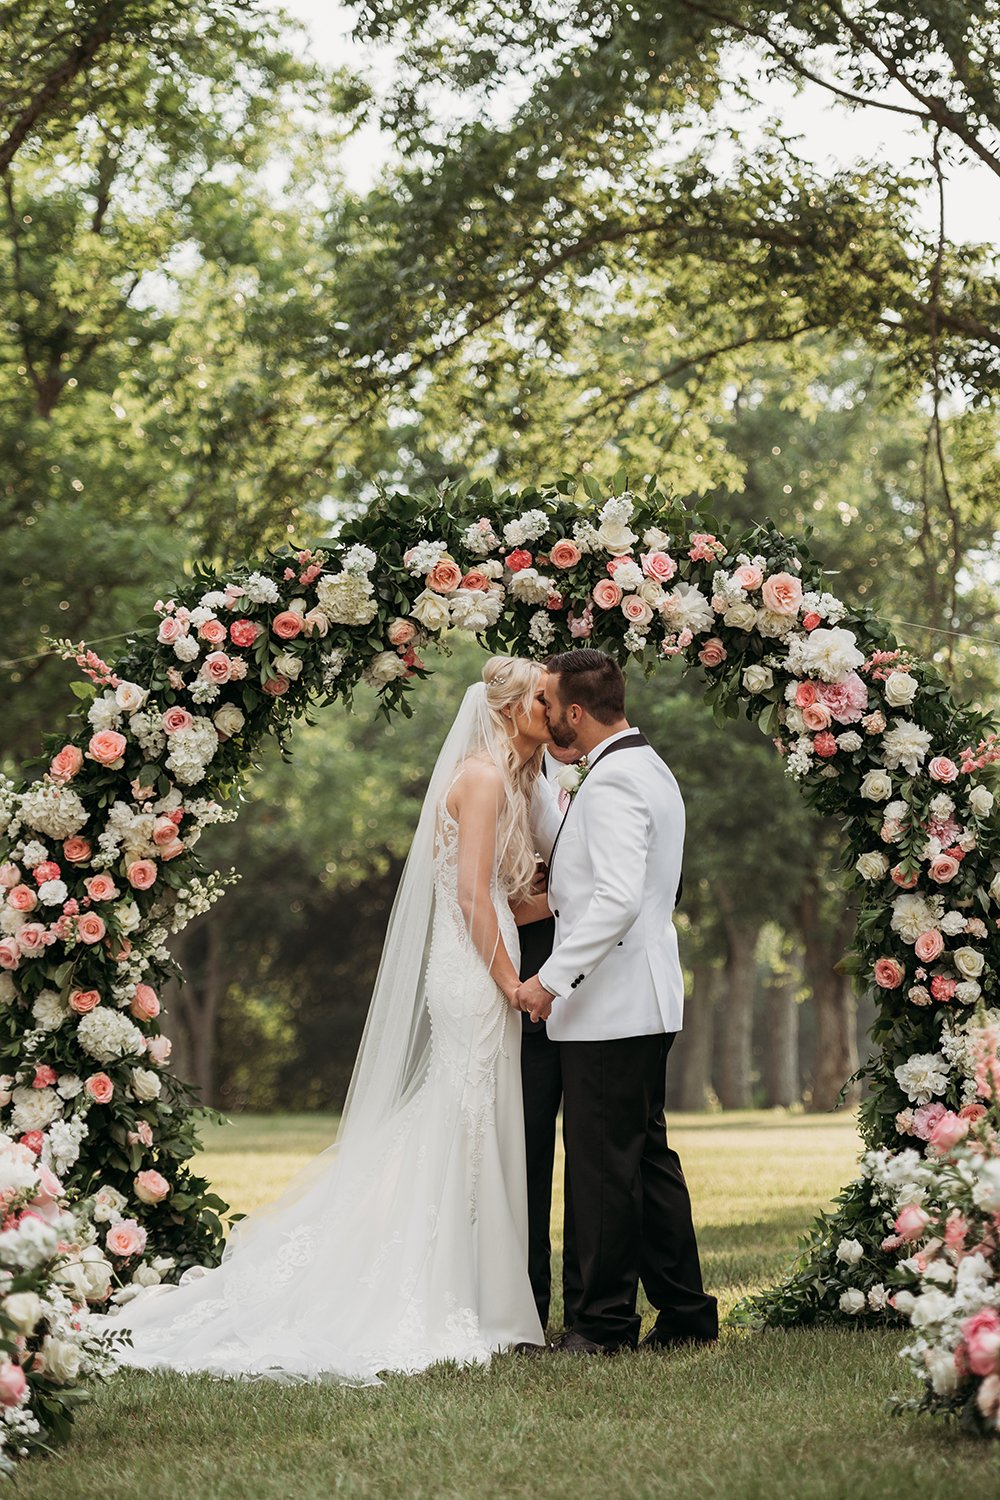 outdoor wedding ceremony - floral arch